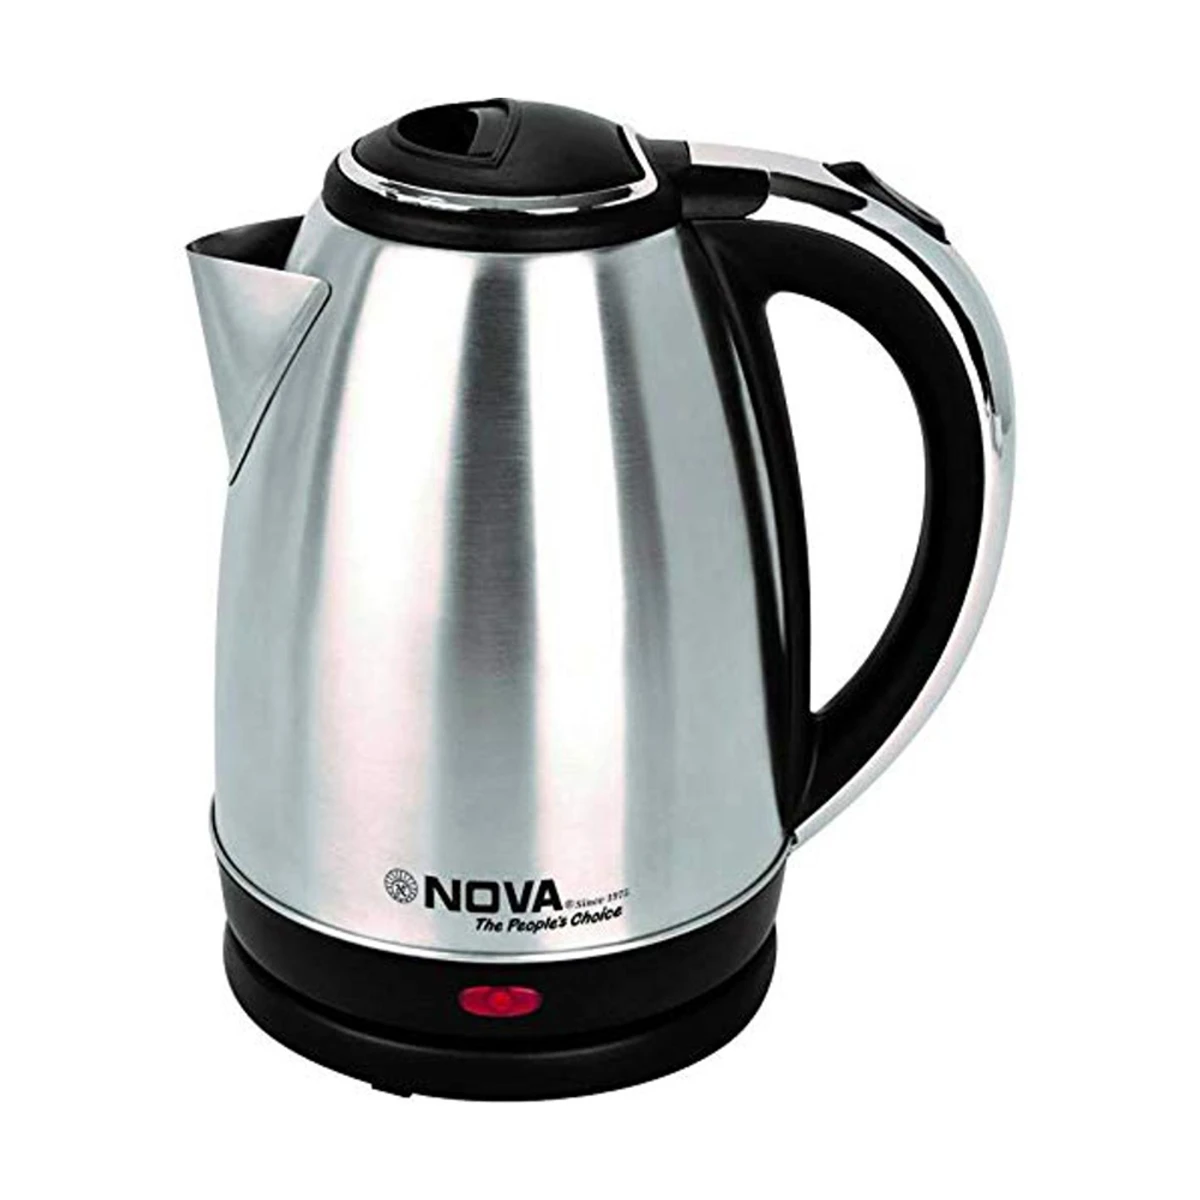 Nova Electric Kettle - 1.8 Liter  Silver and Black